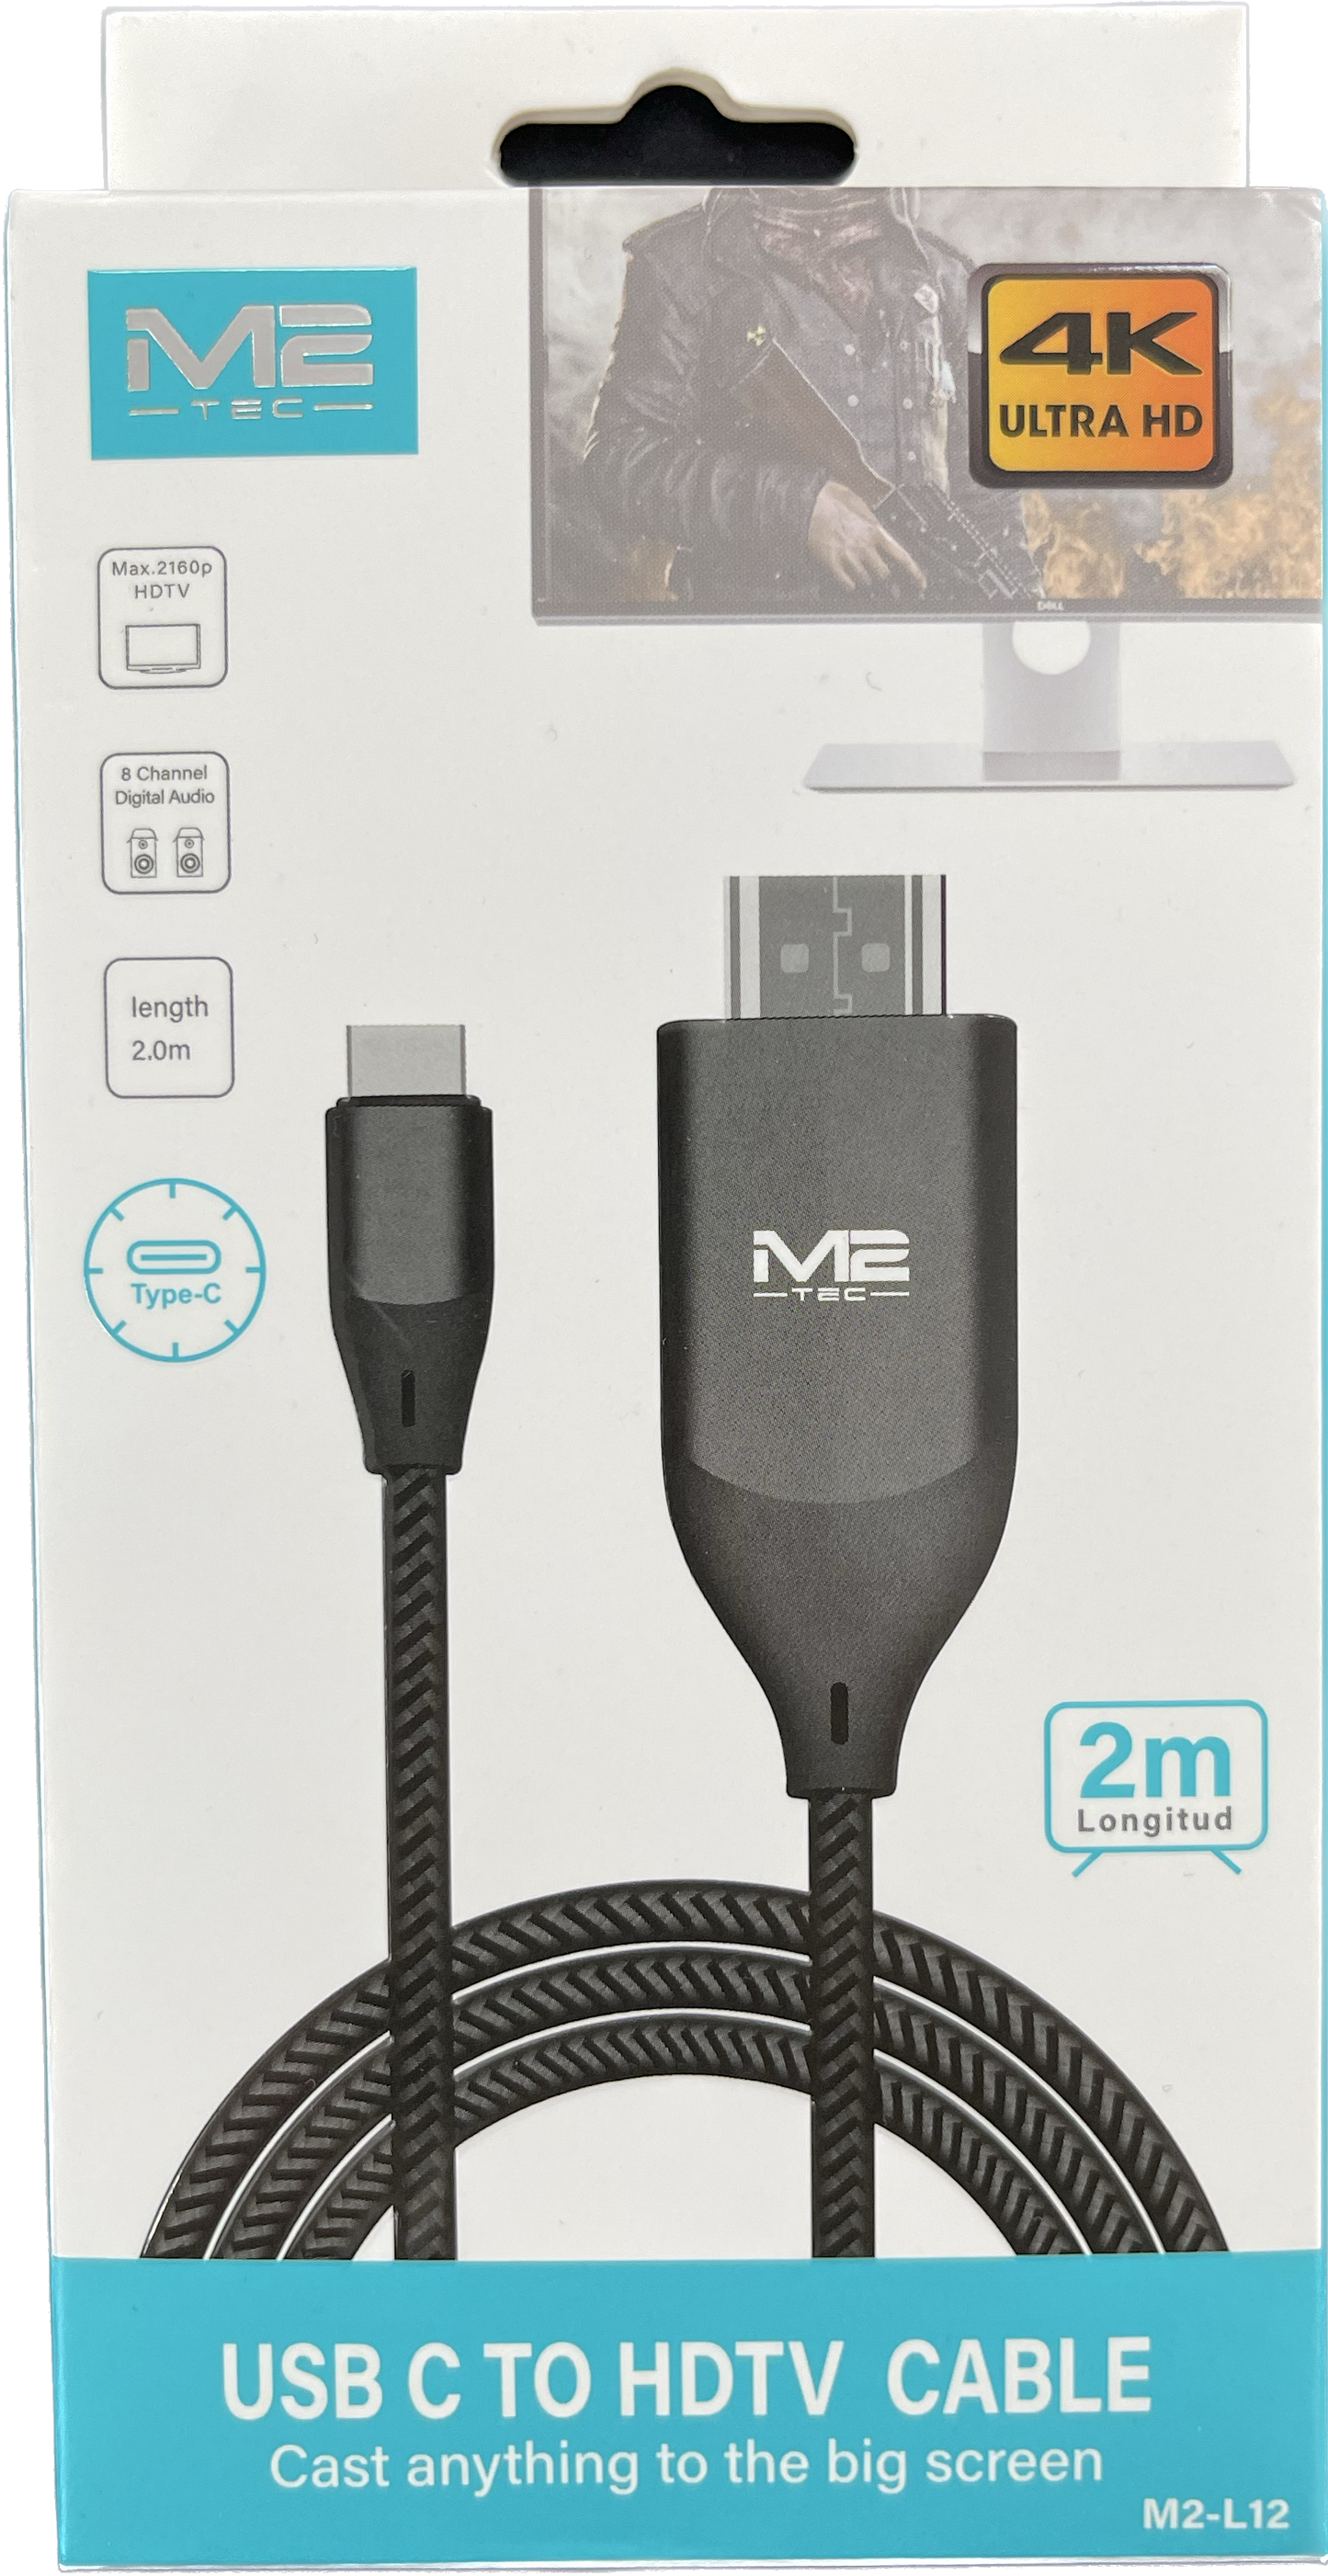 M2 TEC M2-L12 USB C TO HDTV